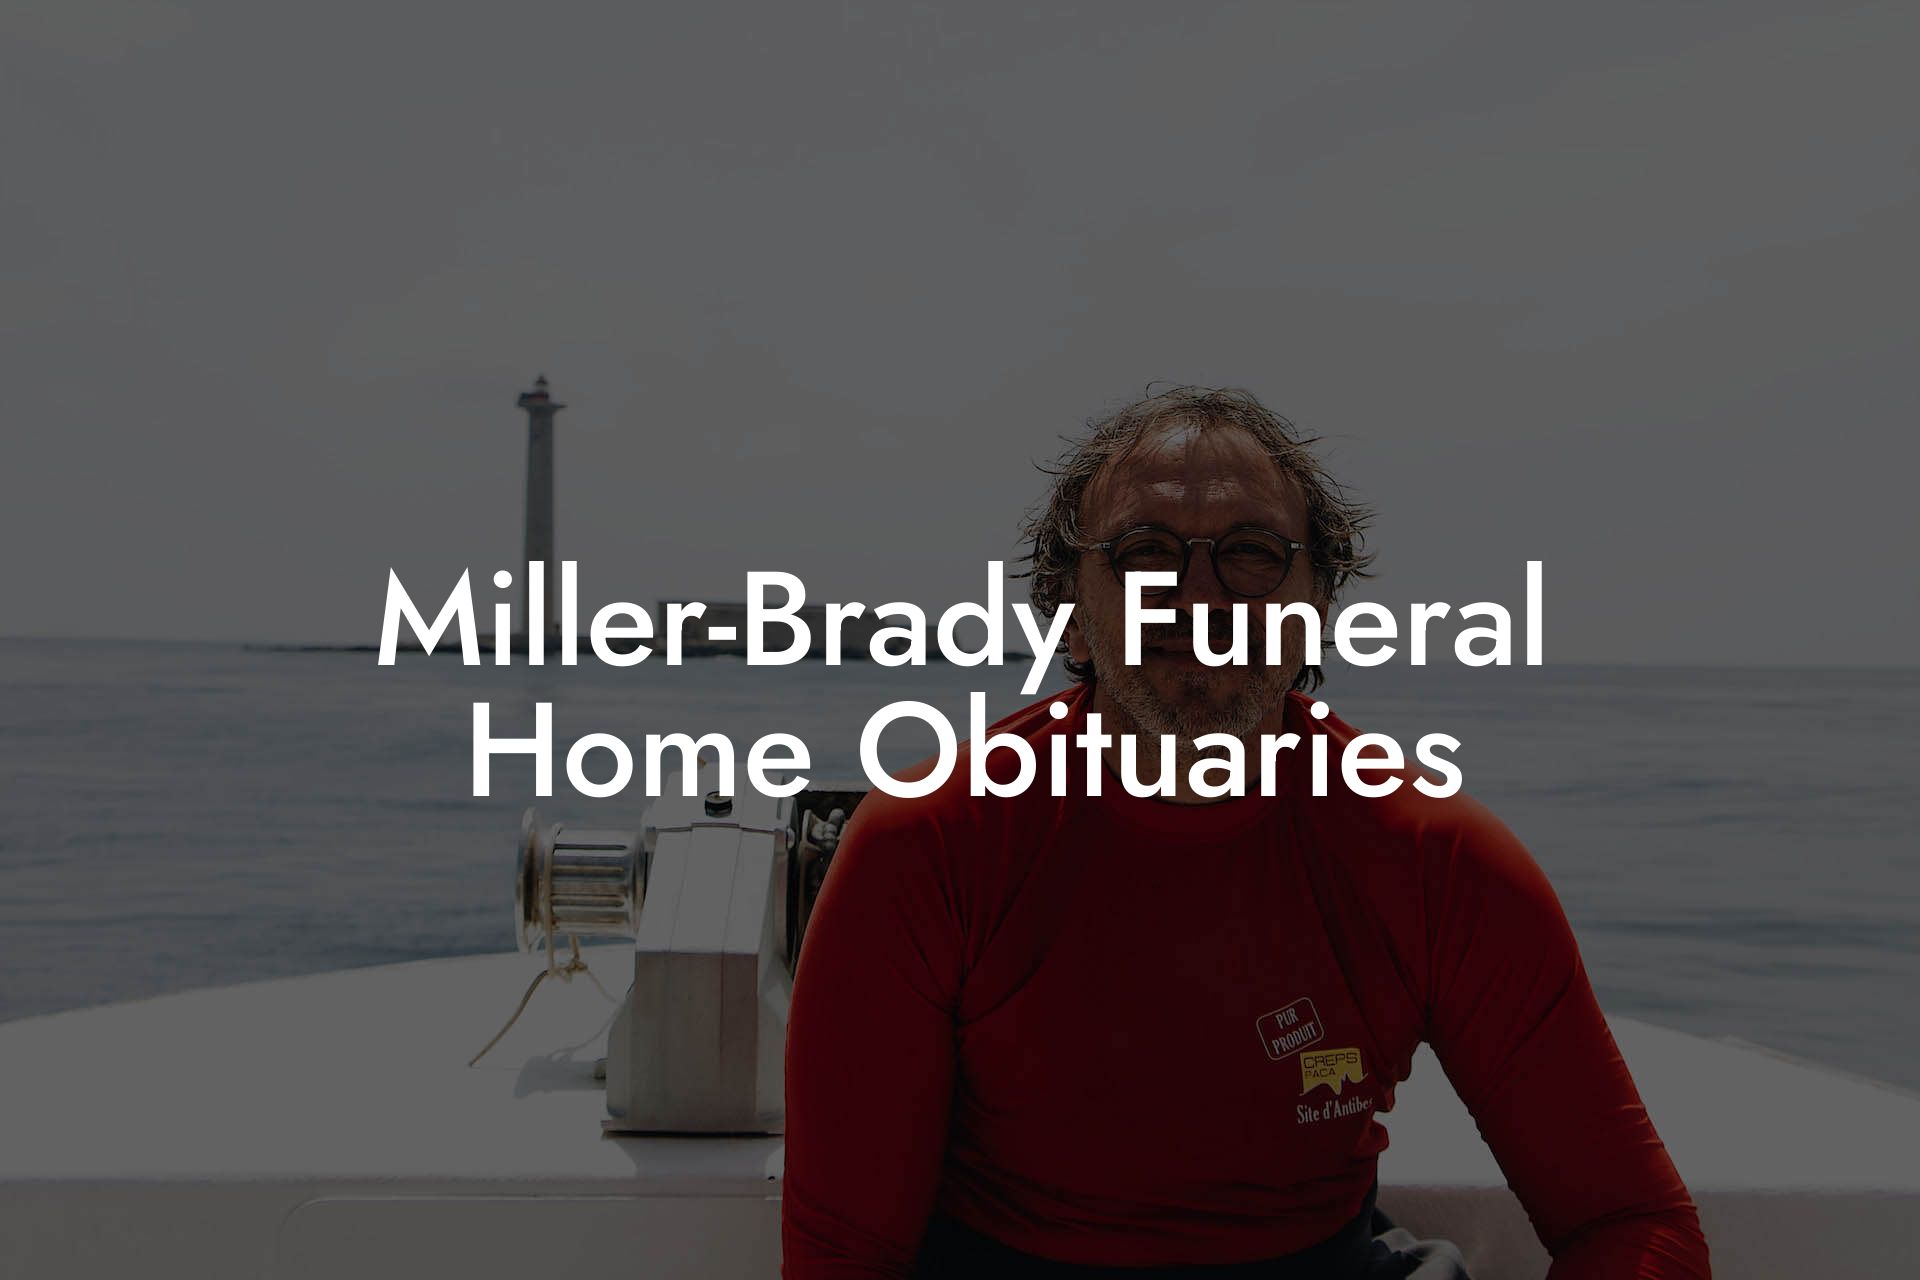 Miller-Brady Funeral Home Obituaries